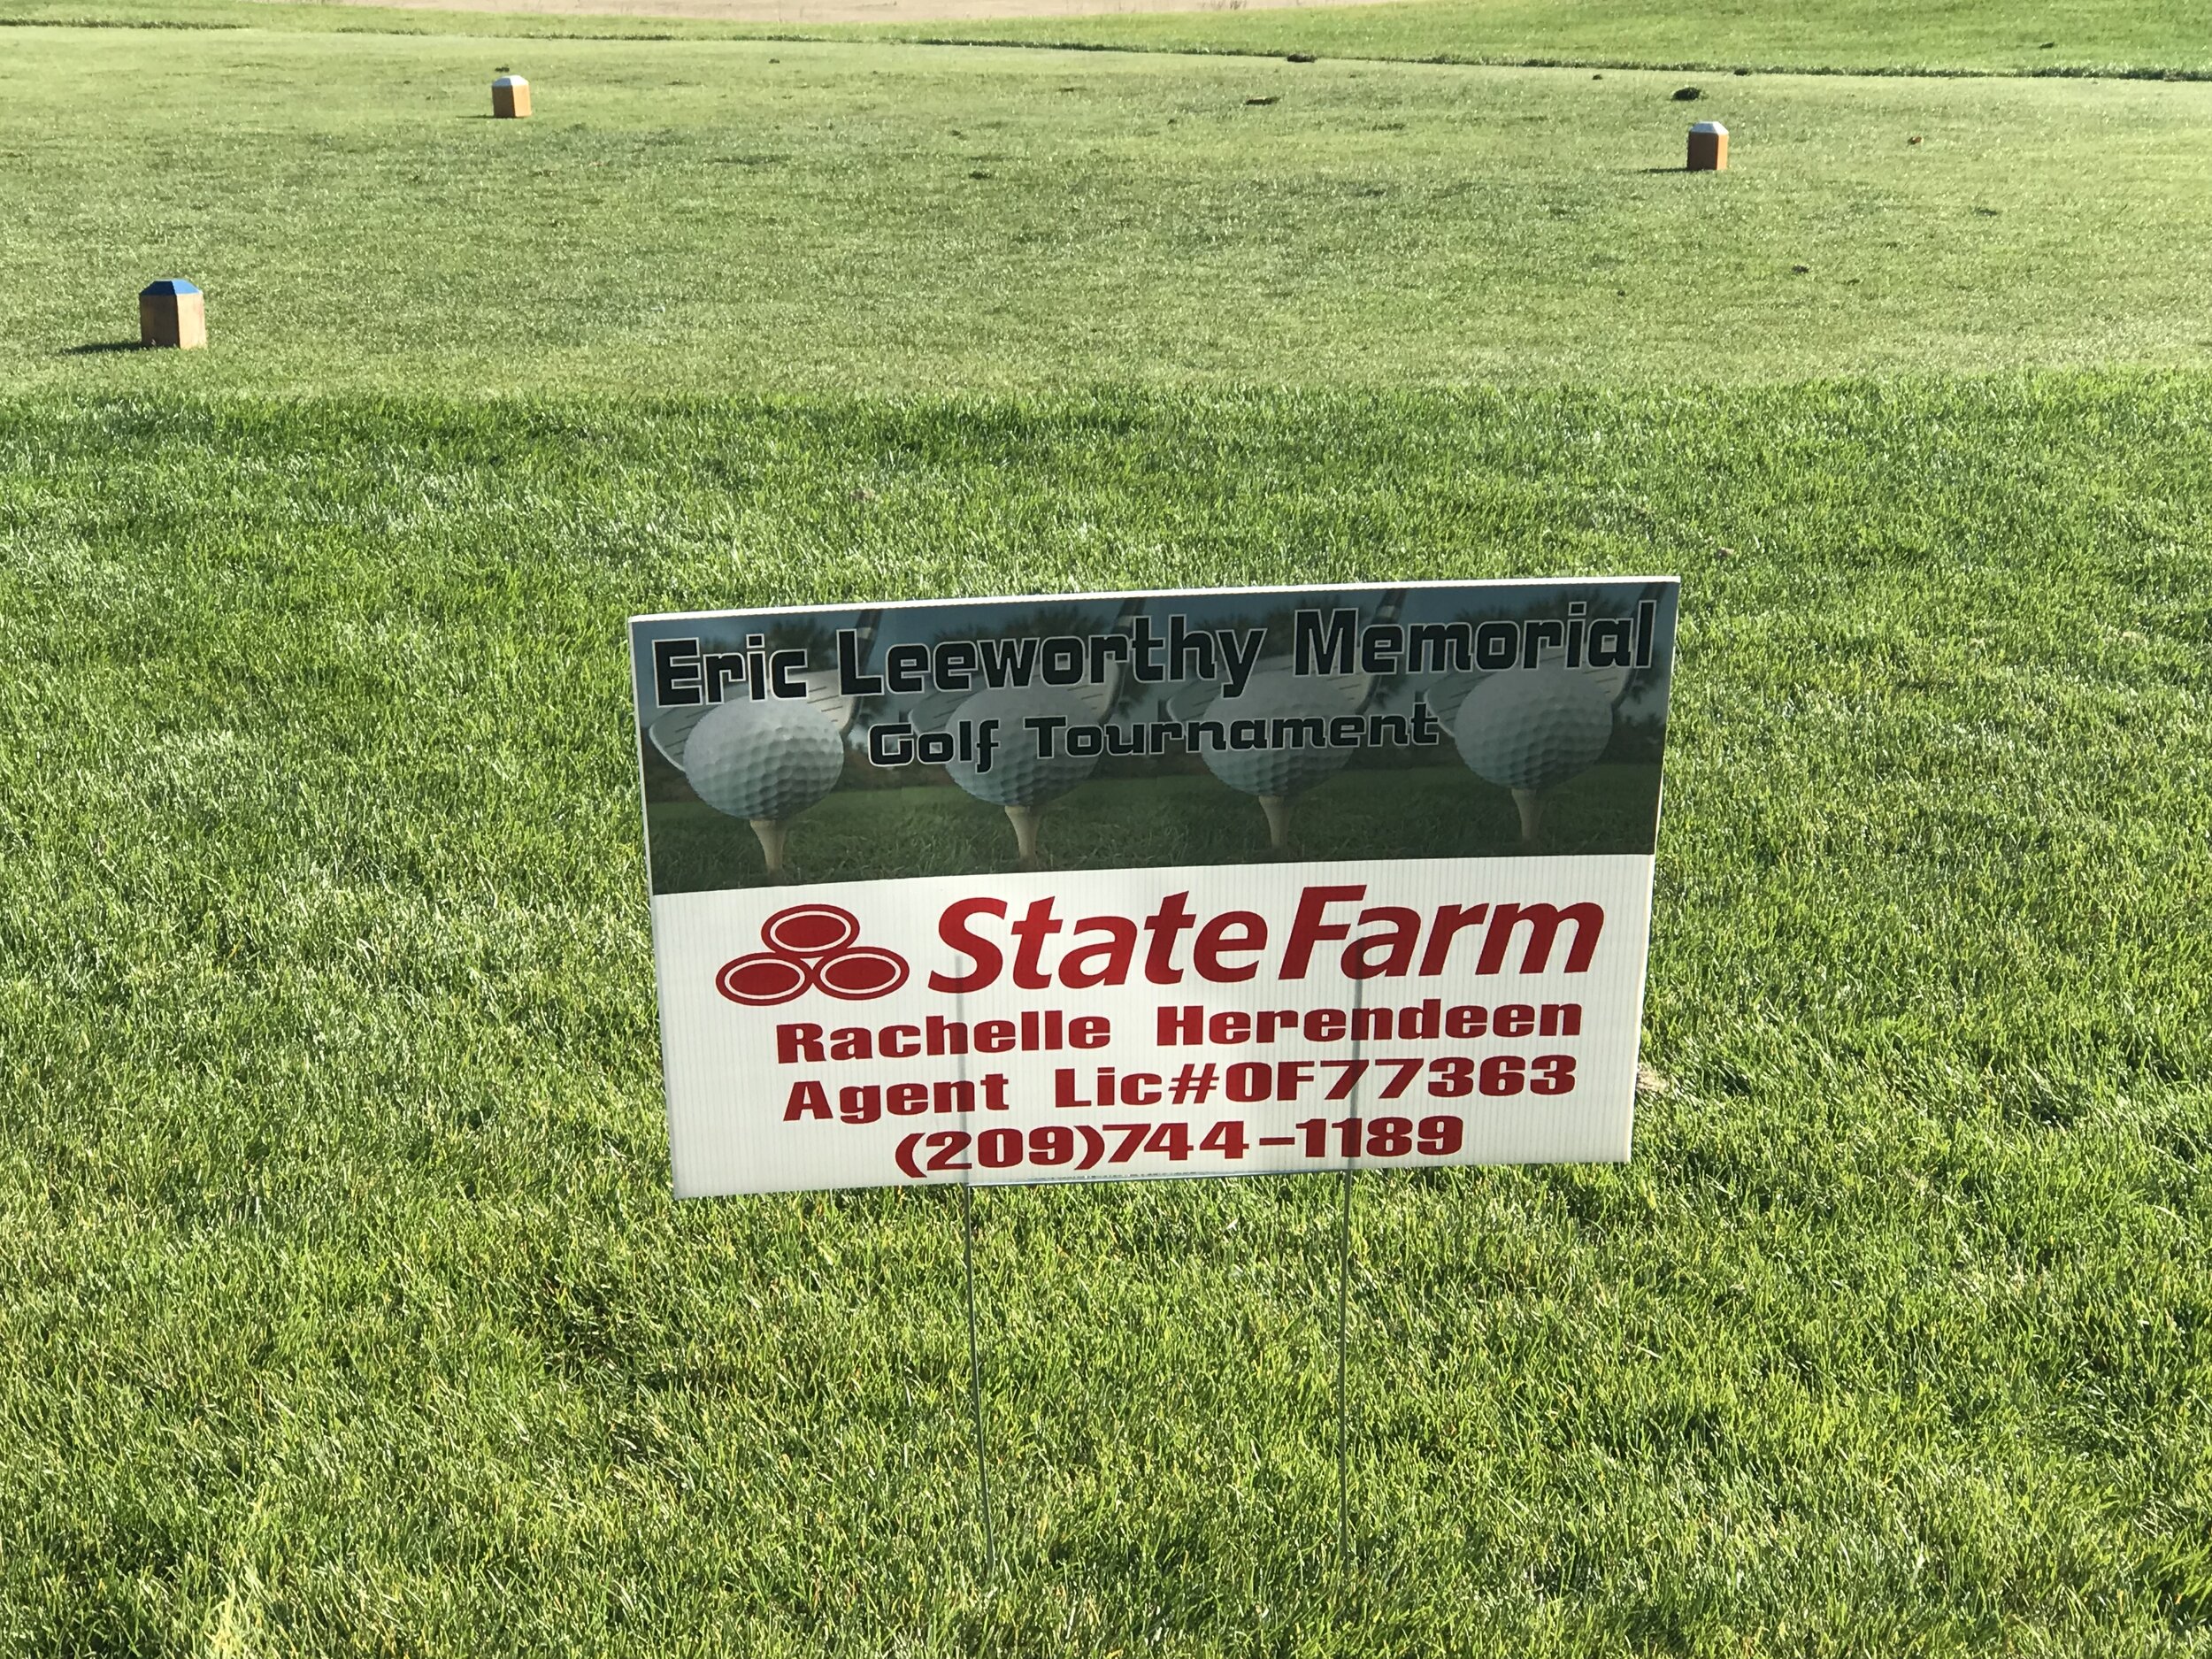 State Farm Sign.JPG